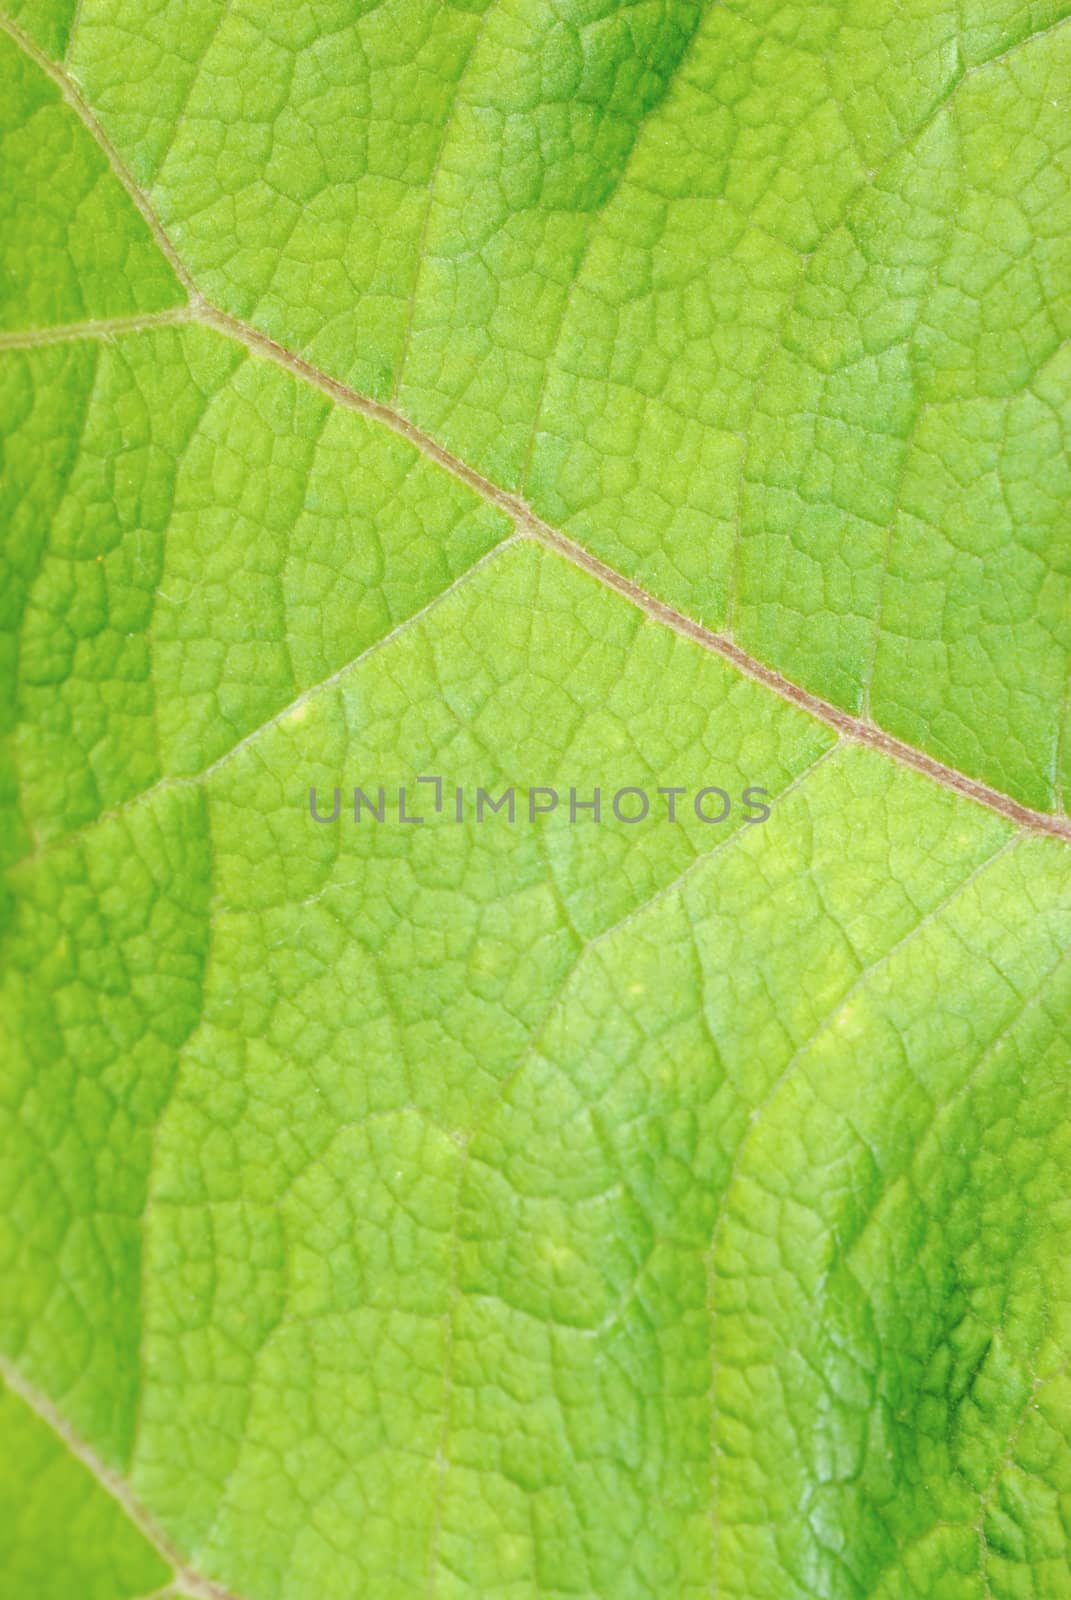 In summer, green leaf close-up